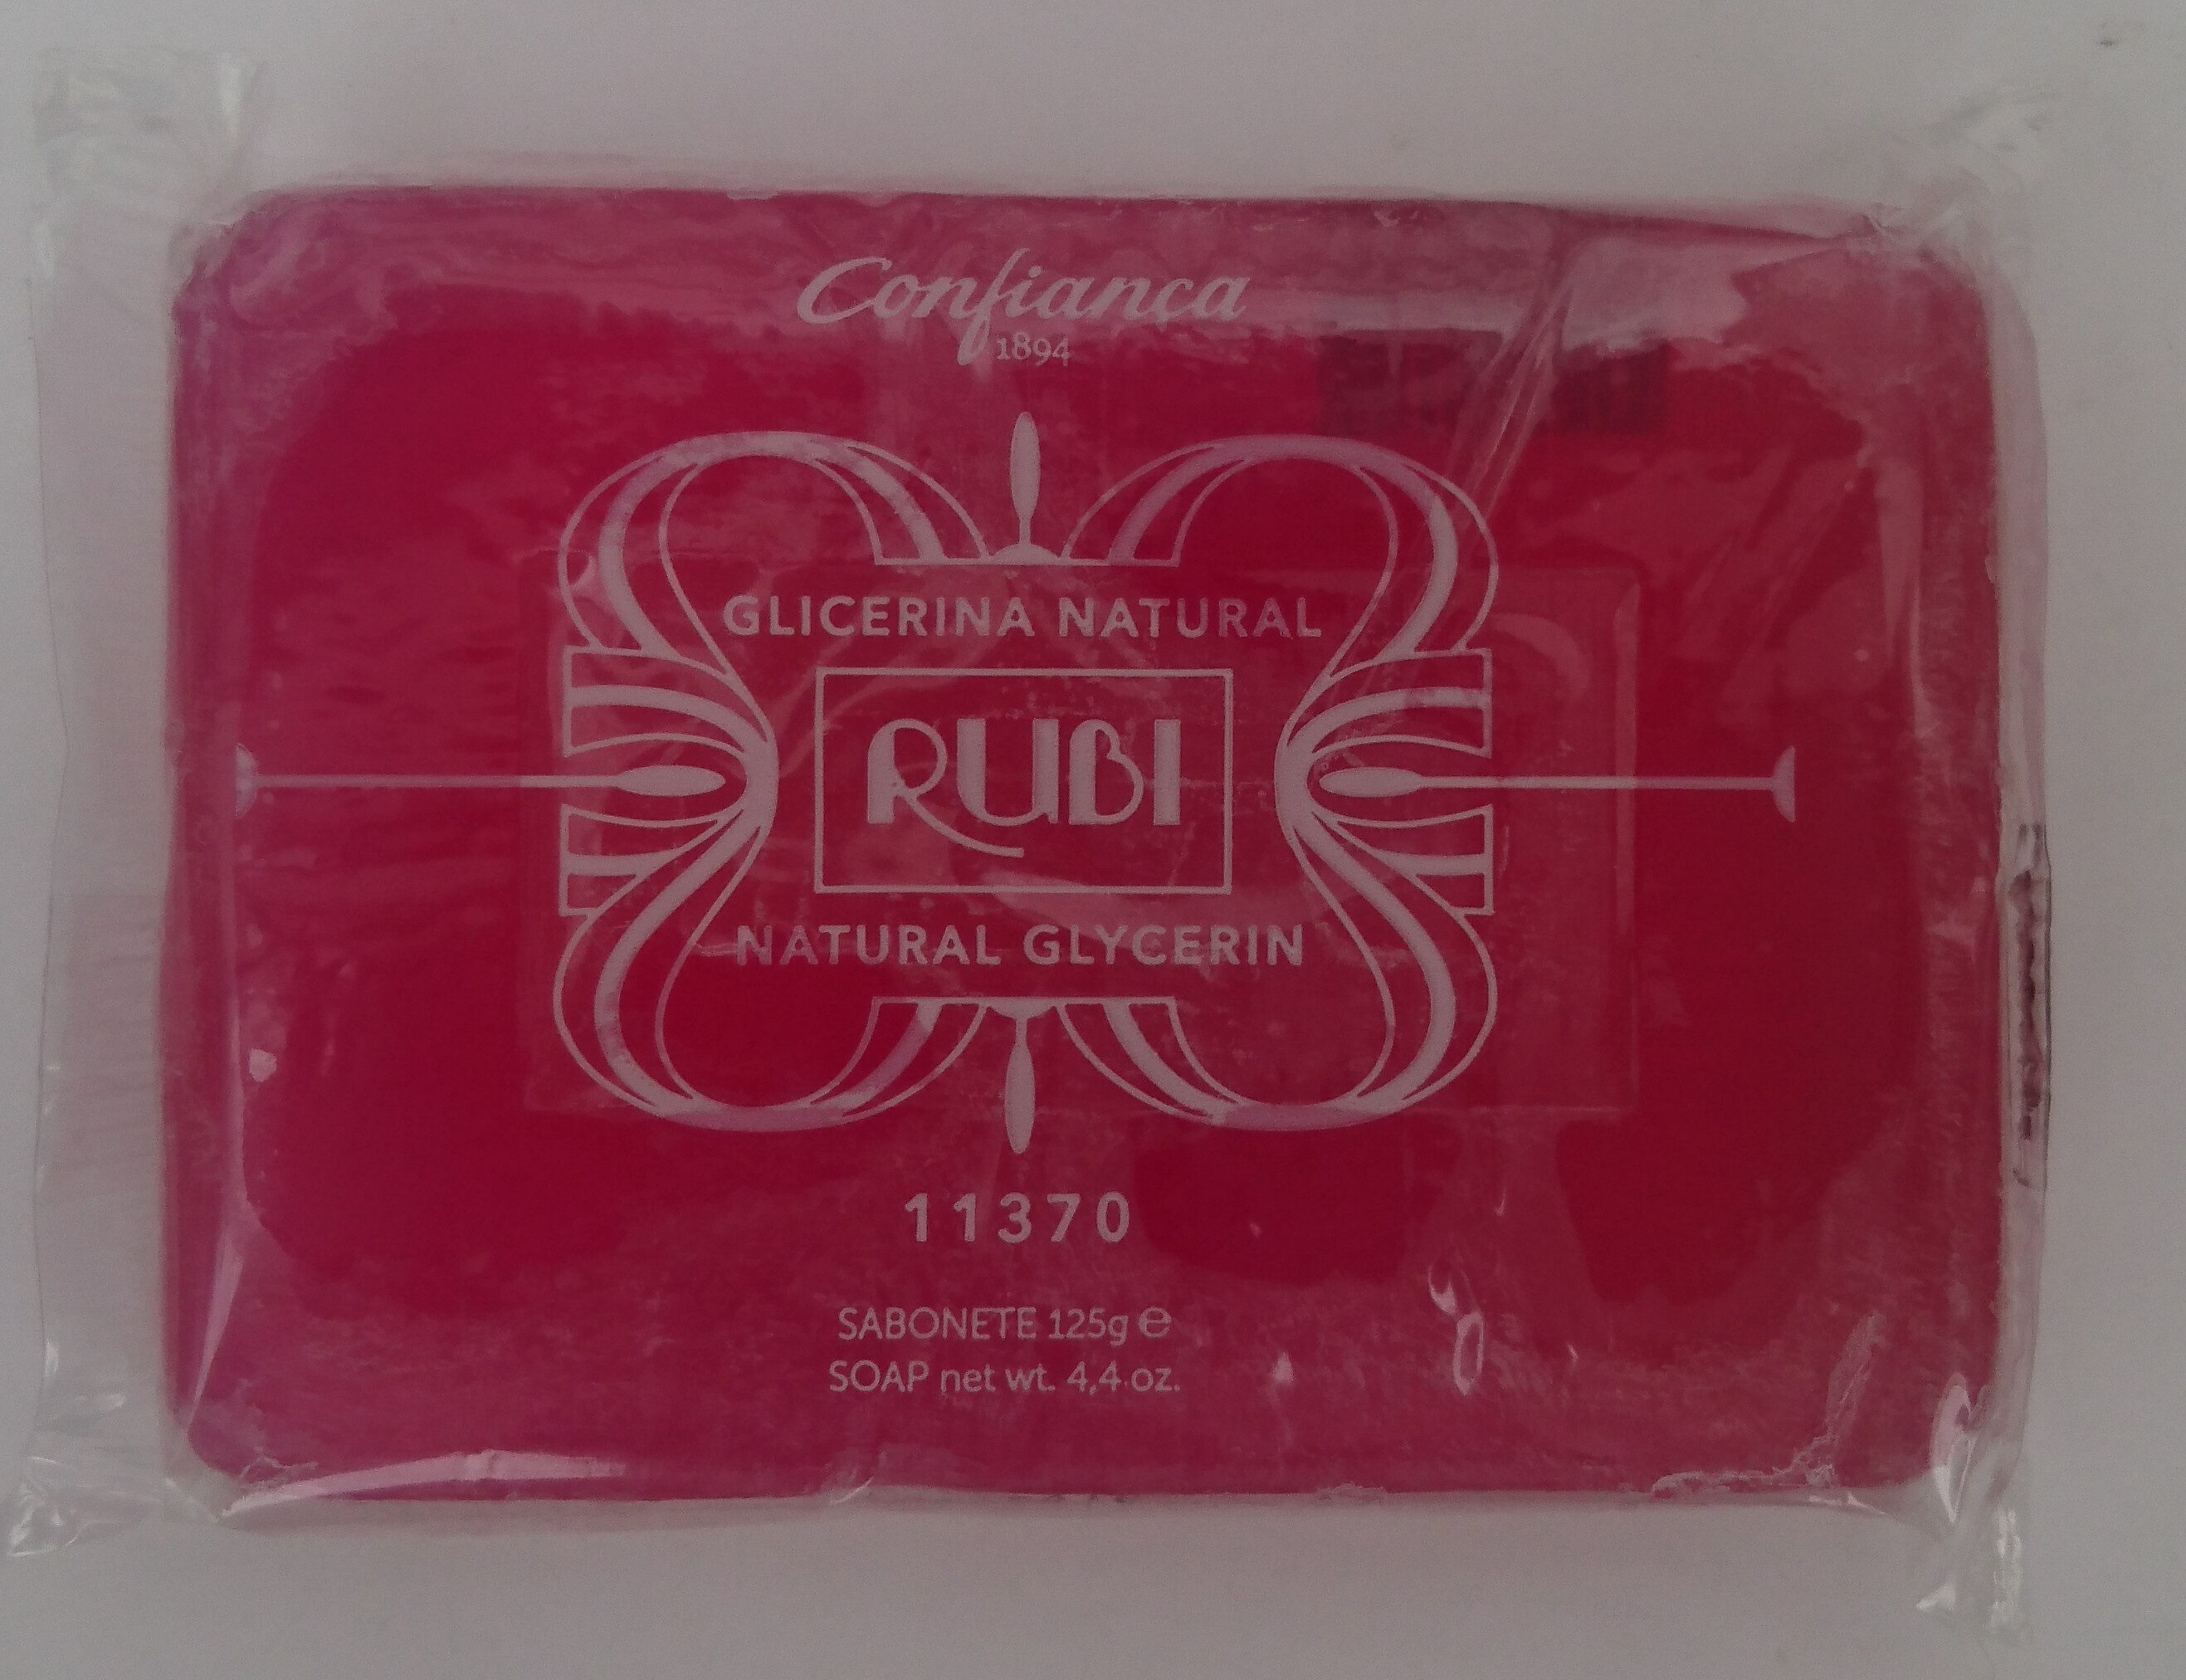 Glicerina natural rubi - Confiança - 125 g